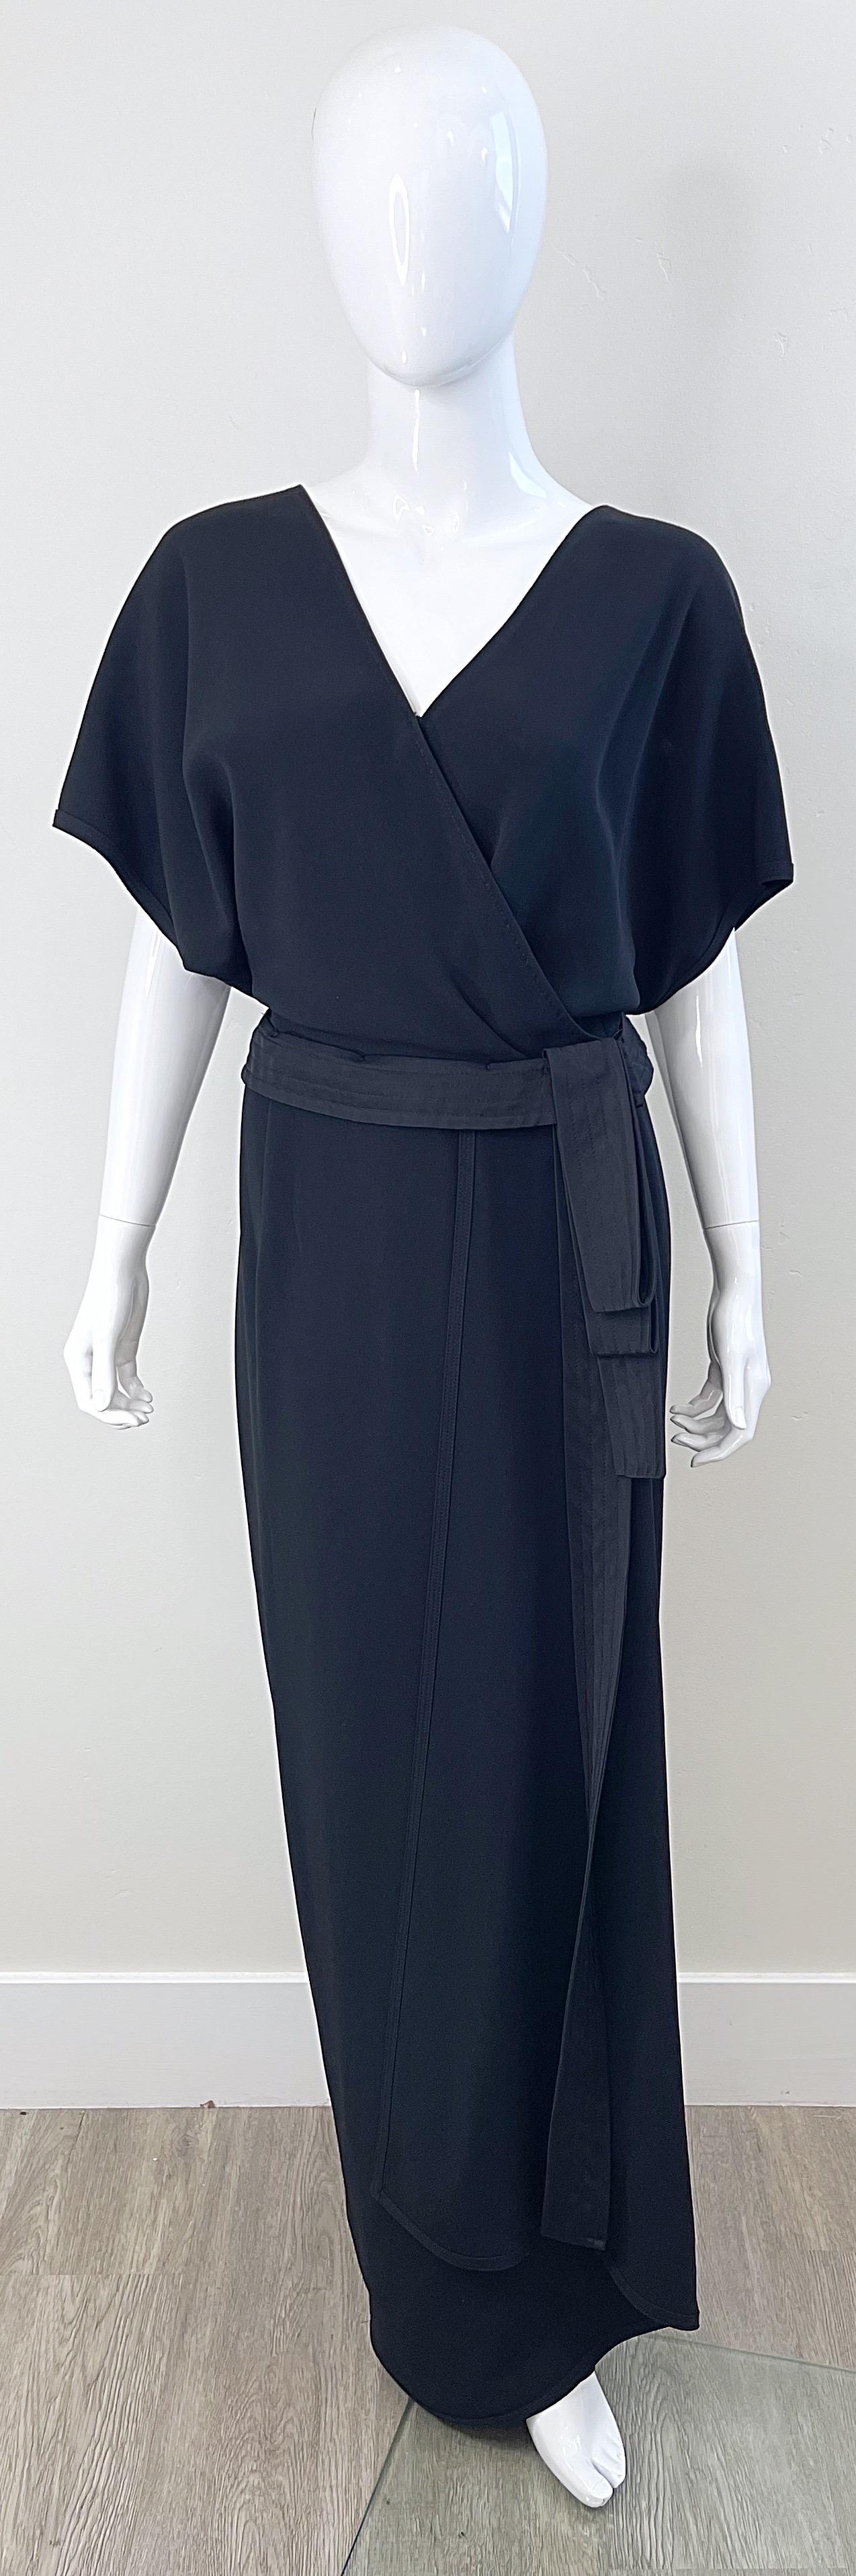 Women's NWT Gianfranco Ferre 2000s Size 44 / 8 - 10 Black Dolman Sleeve Gown Maxi Dress For Sale